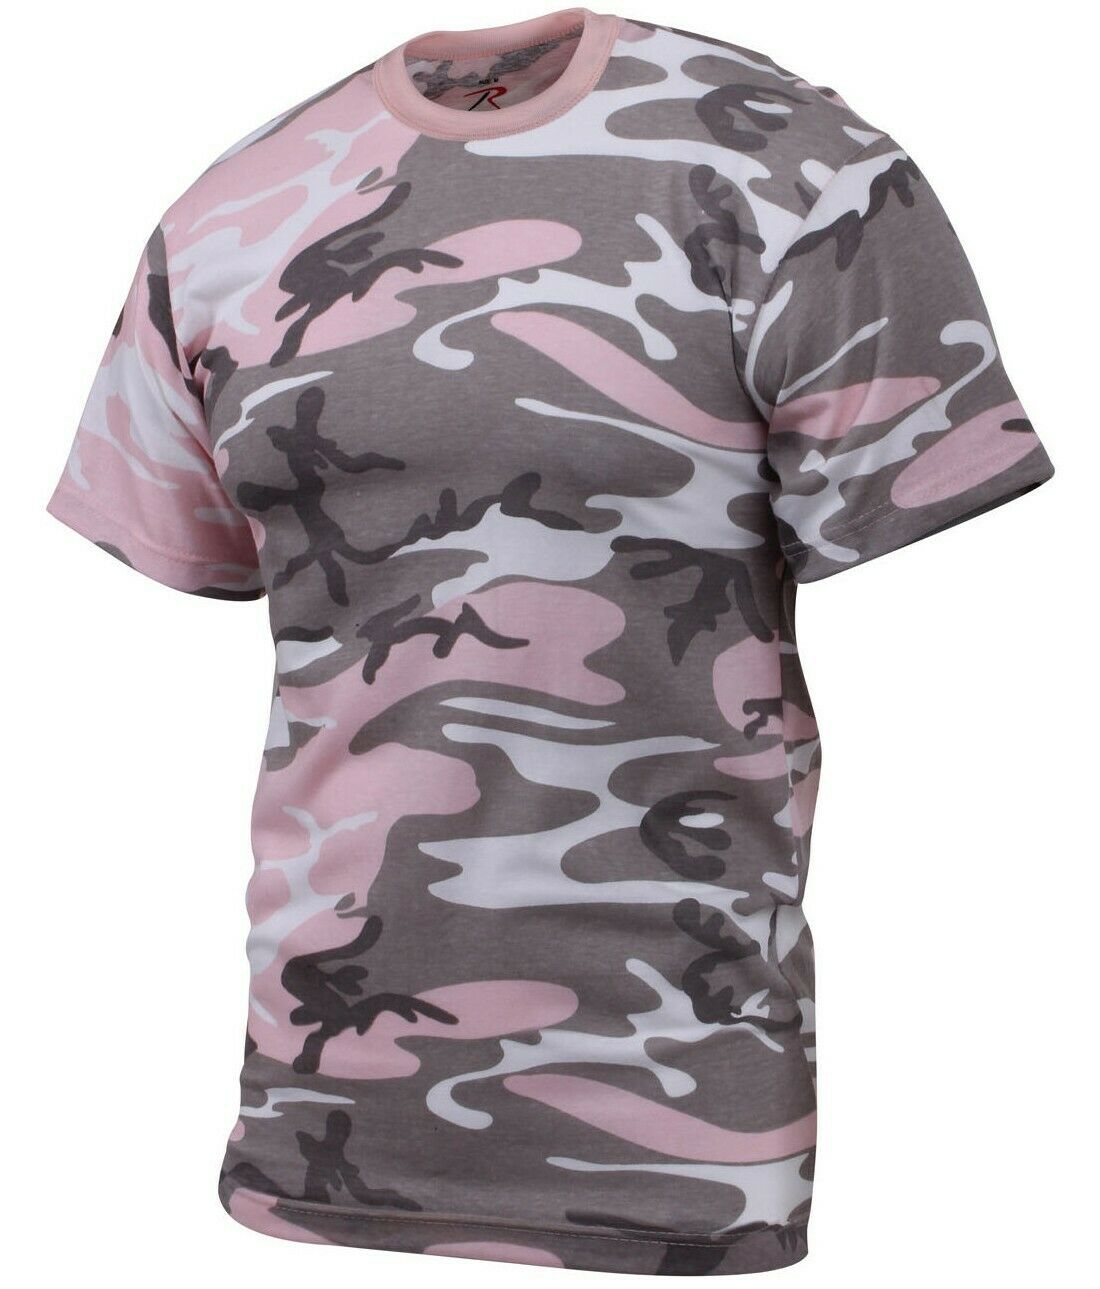 Rothco Color Camo T-shirts - Subdued Pink Camo